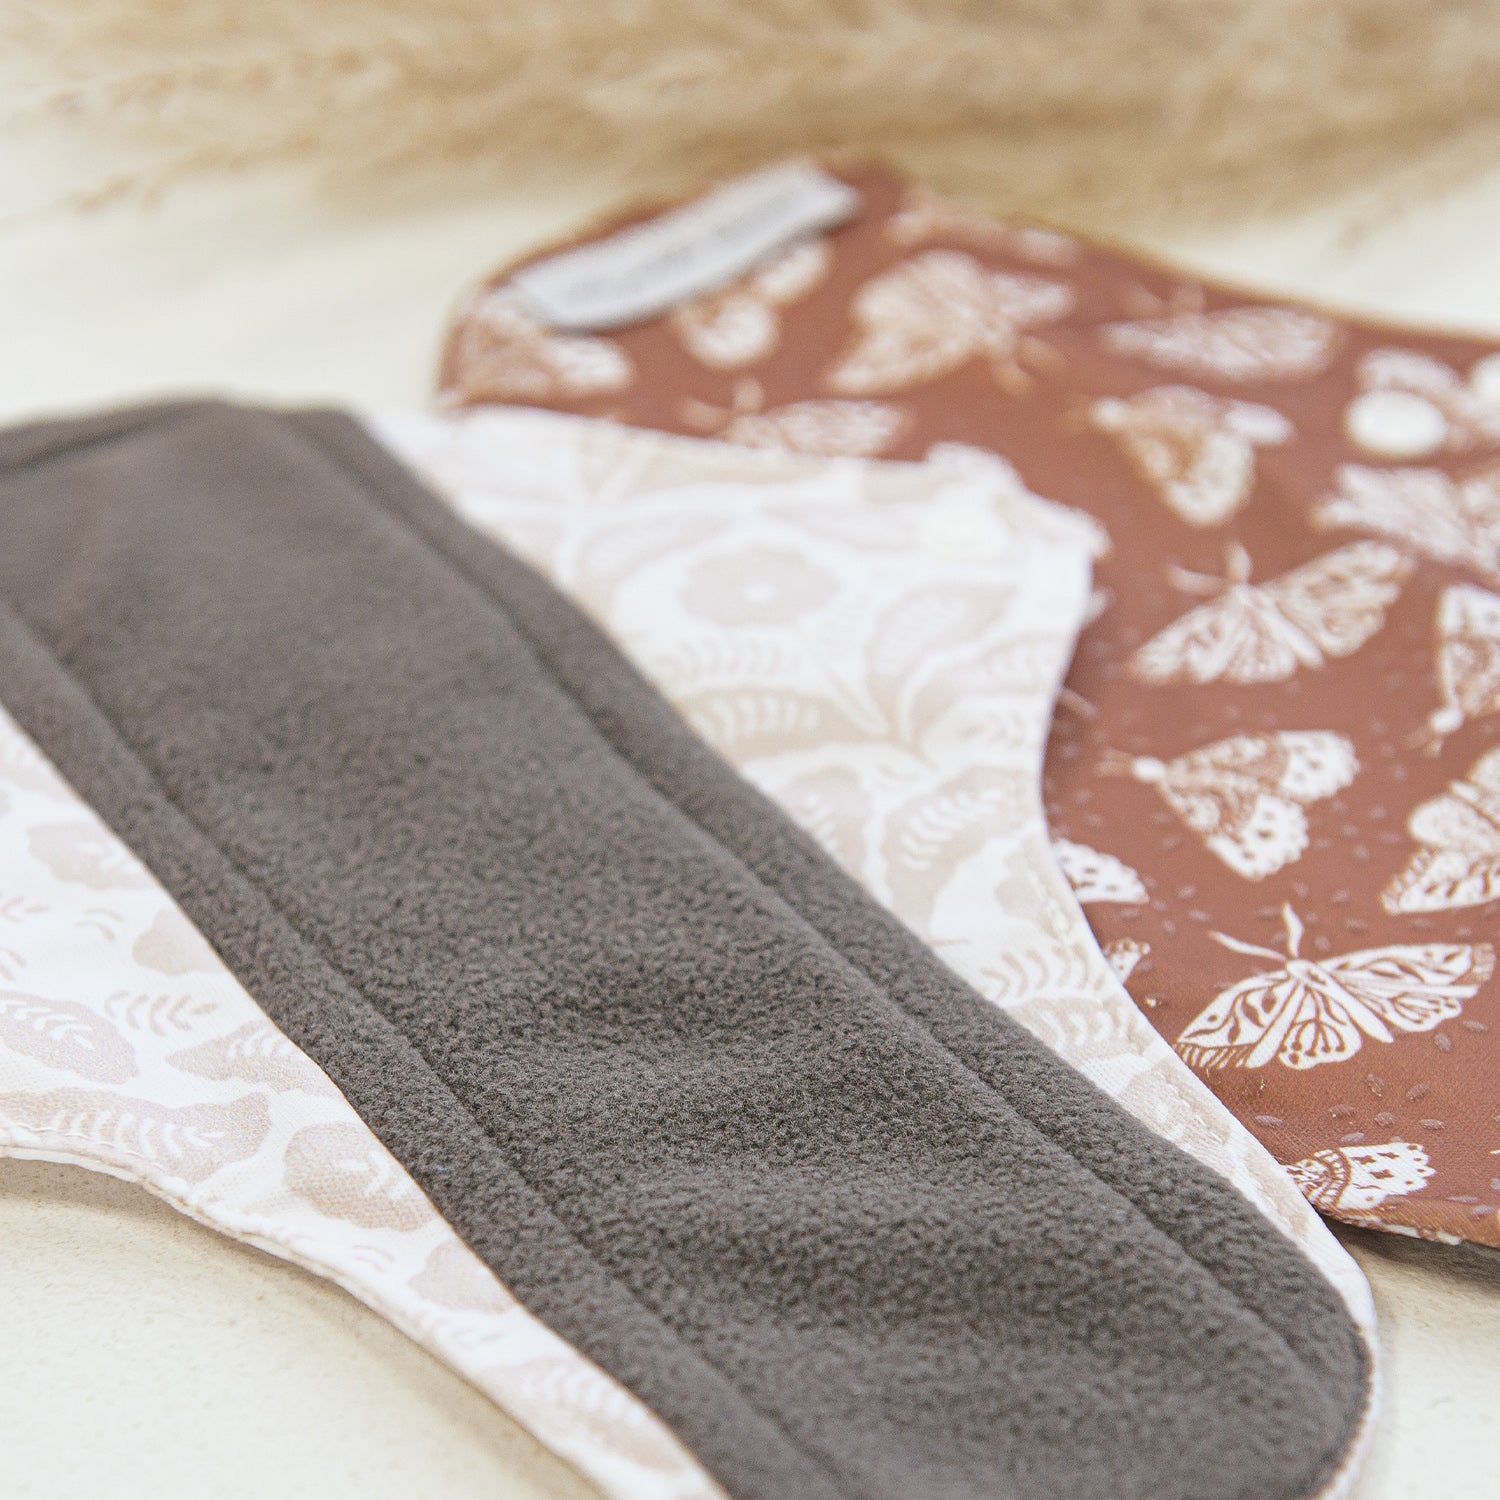 to-Go Panty Kit Includes 4 Items Seamless Thong Underwear Fresh Wipe  Pantyliner & Washbag Travel First Period Kit Feminine Hygiene Incontenance  Emergency 